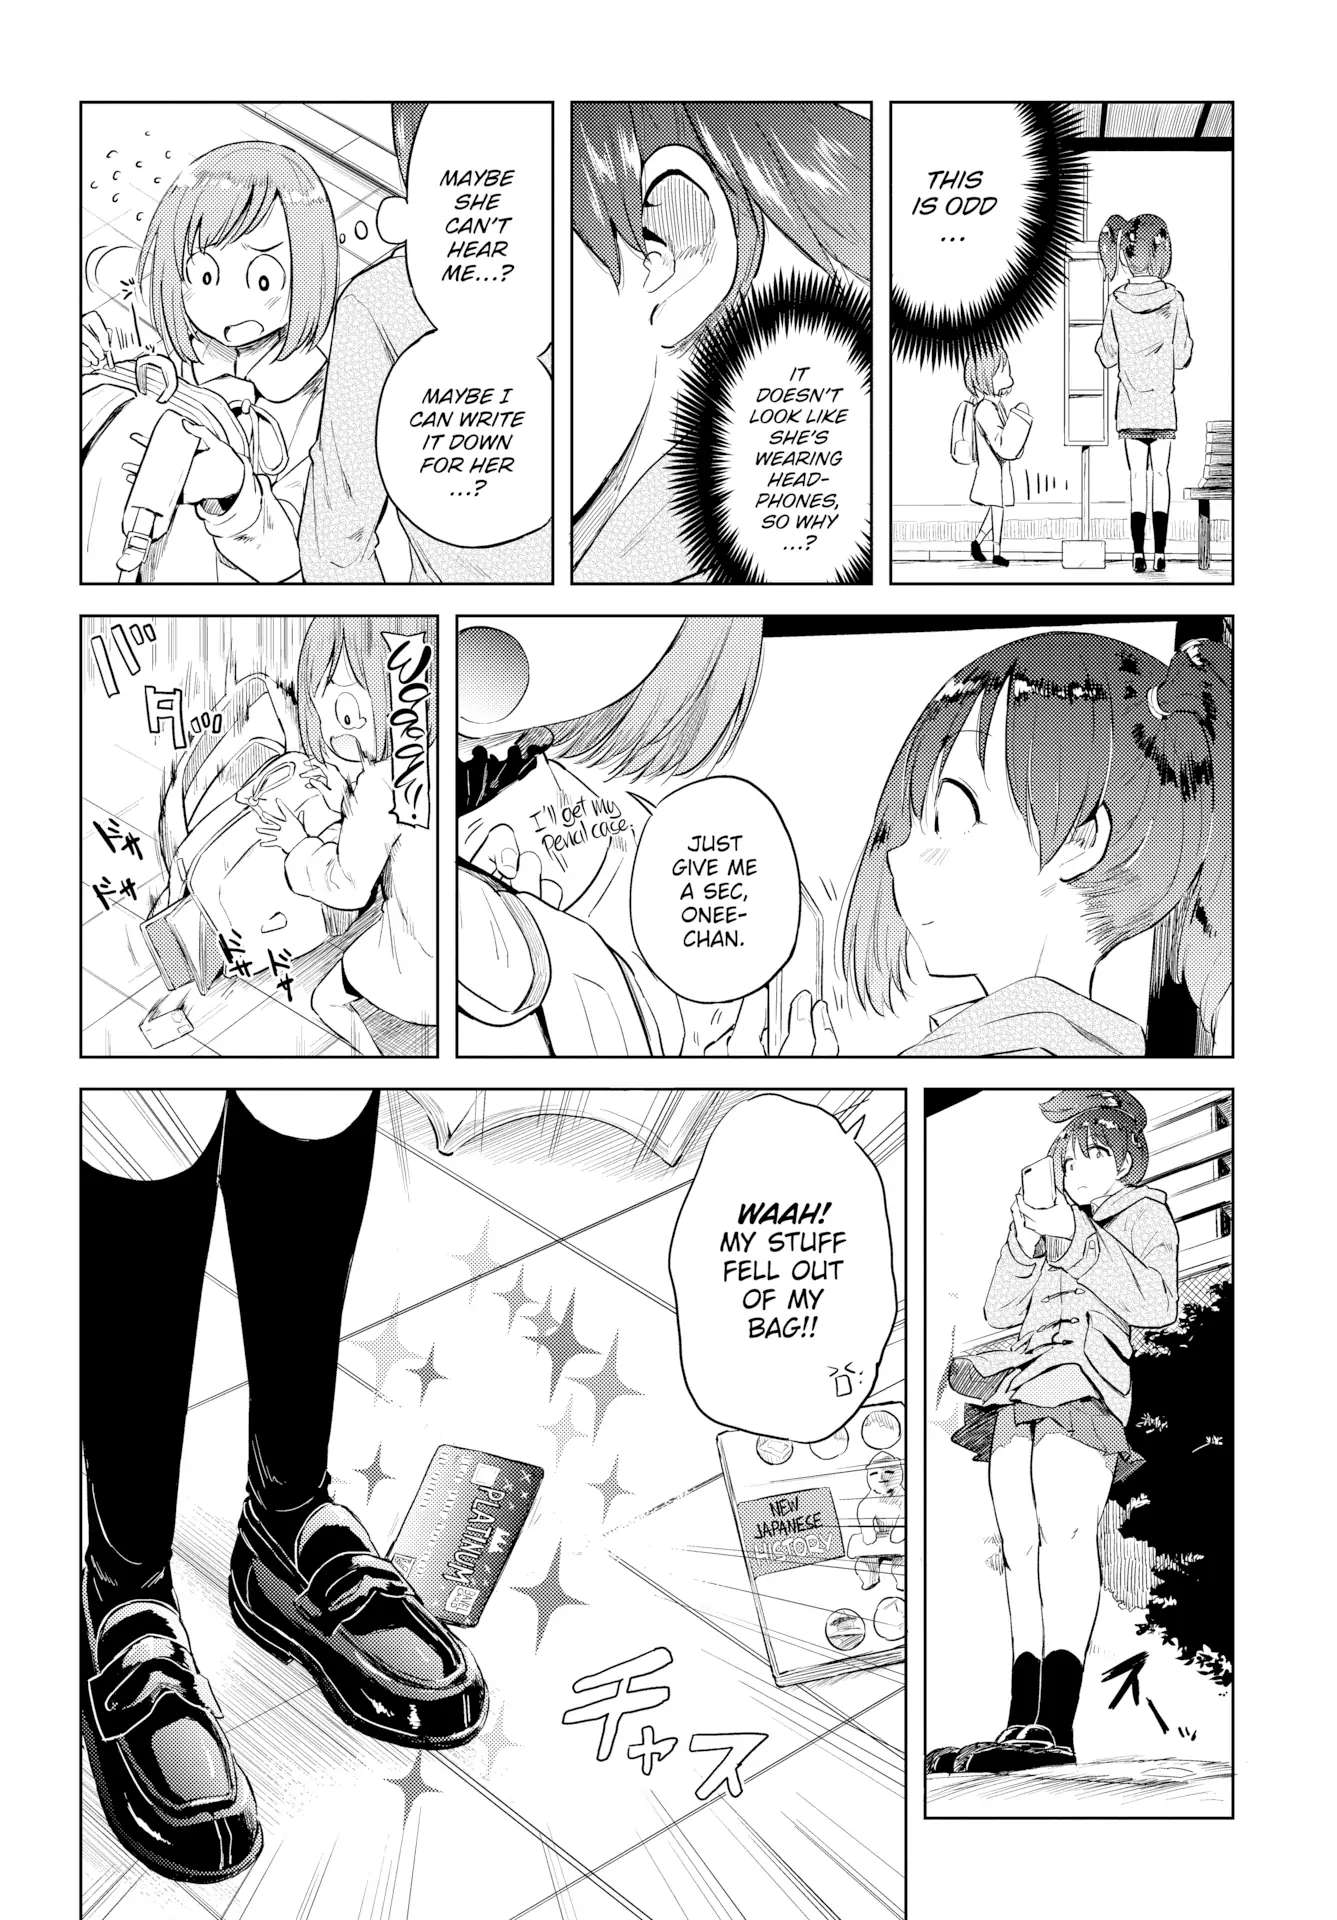 Honomi Break! - Page 2